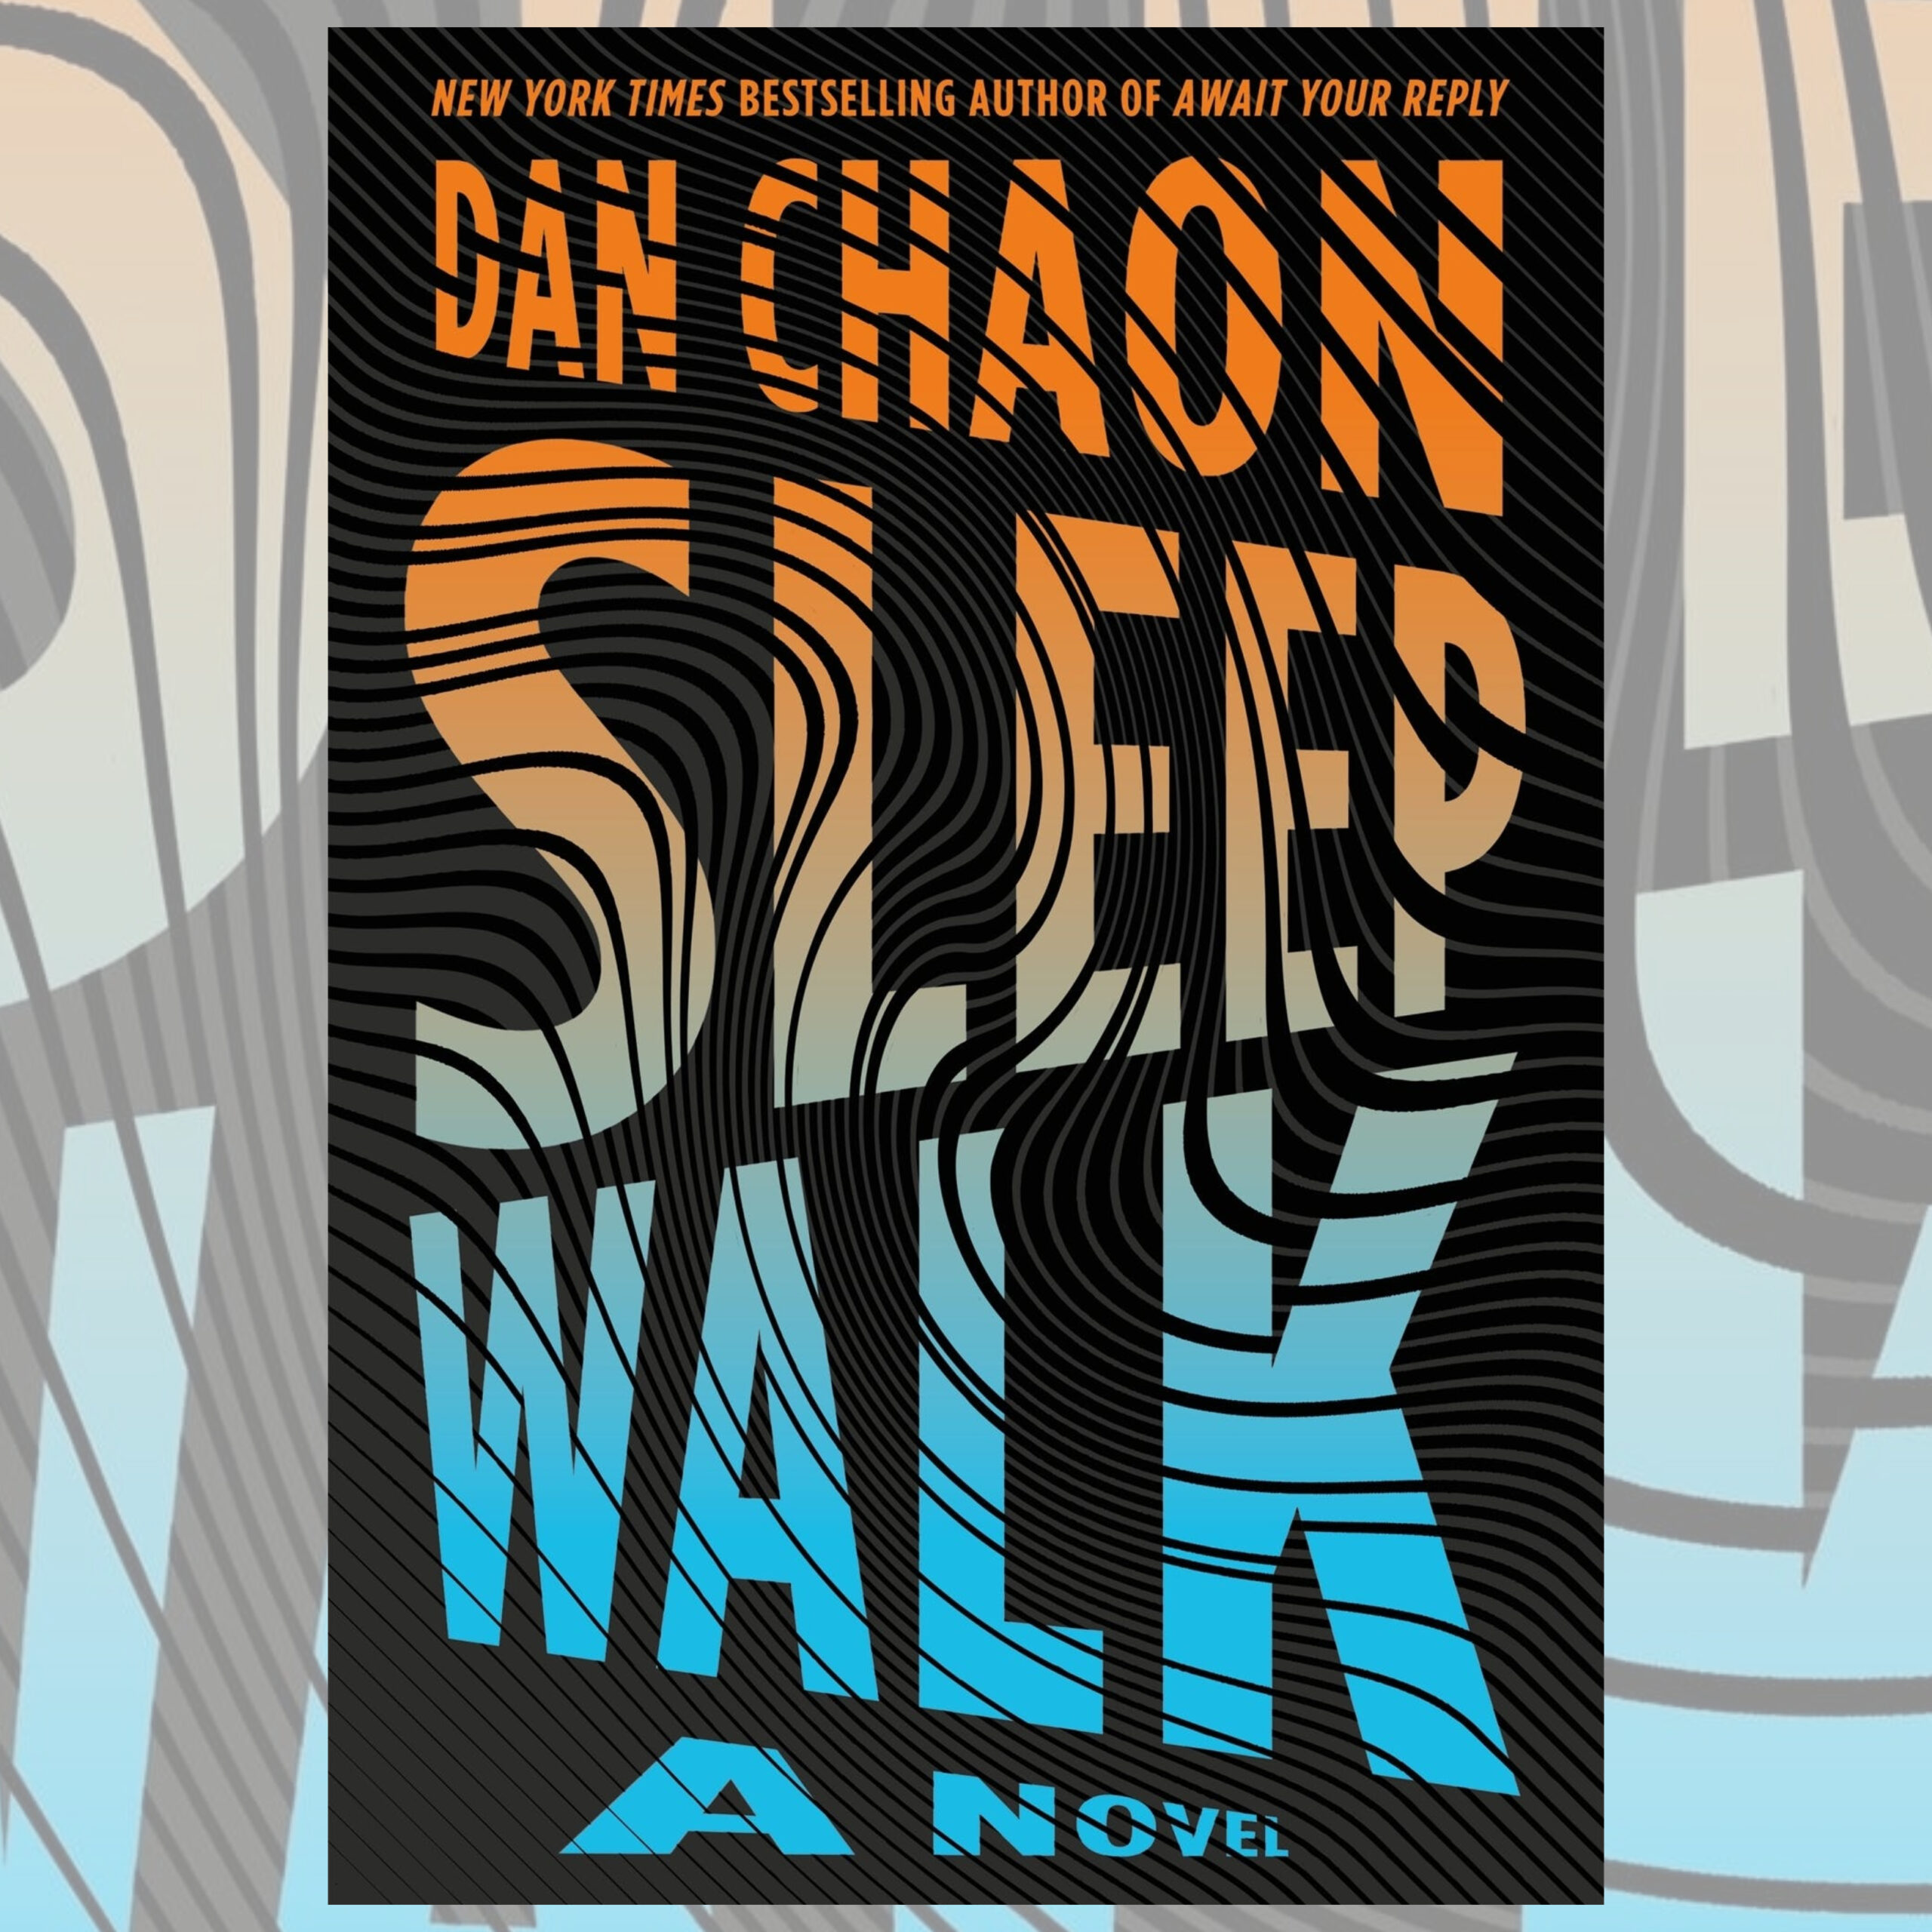 #1771 Dan Chaon “Sleepwalk” | The Book Show